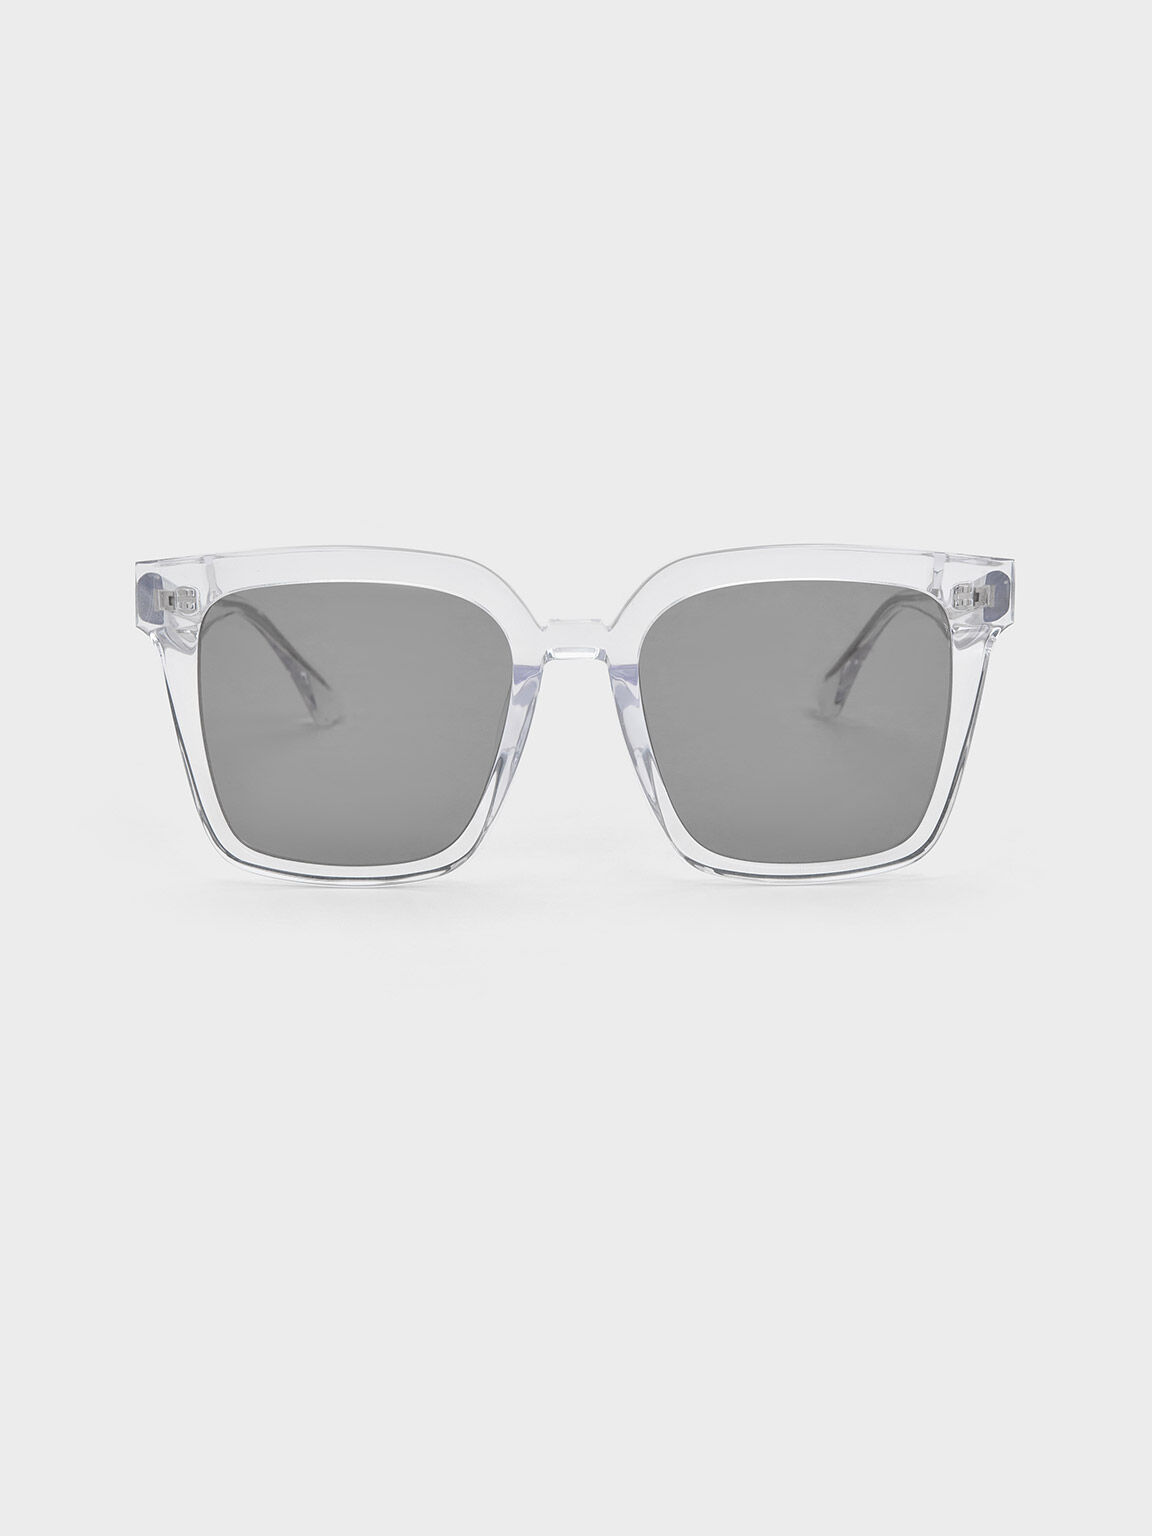 01 Clear Sunglasses - CHIMI